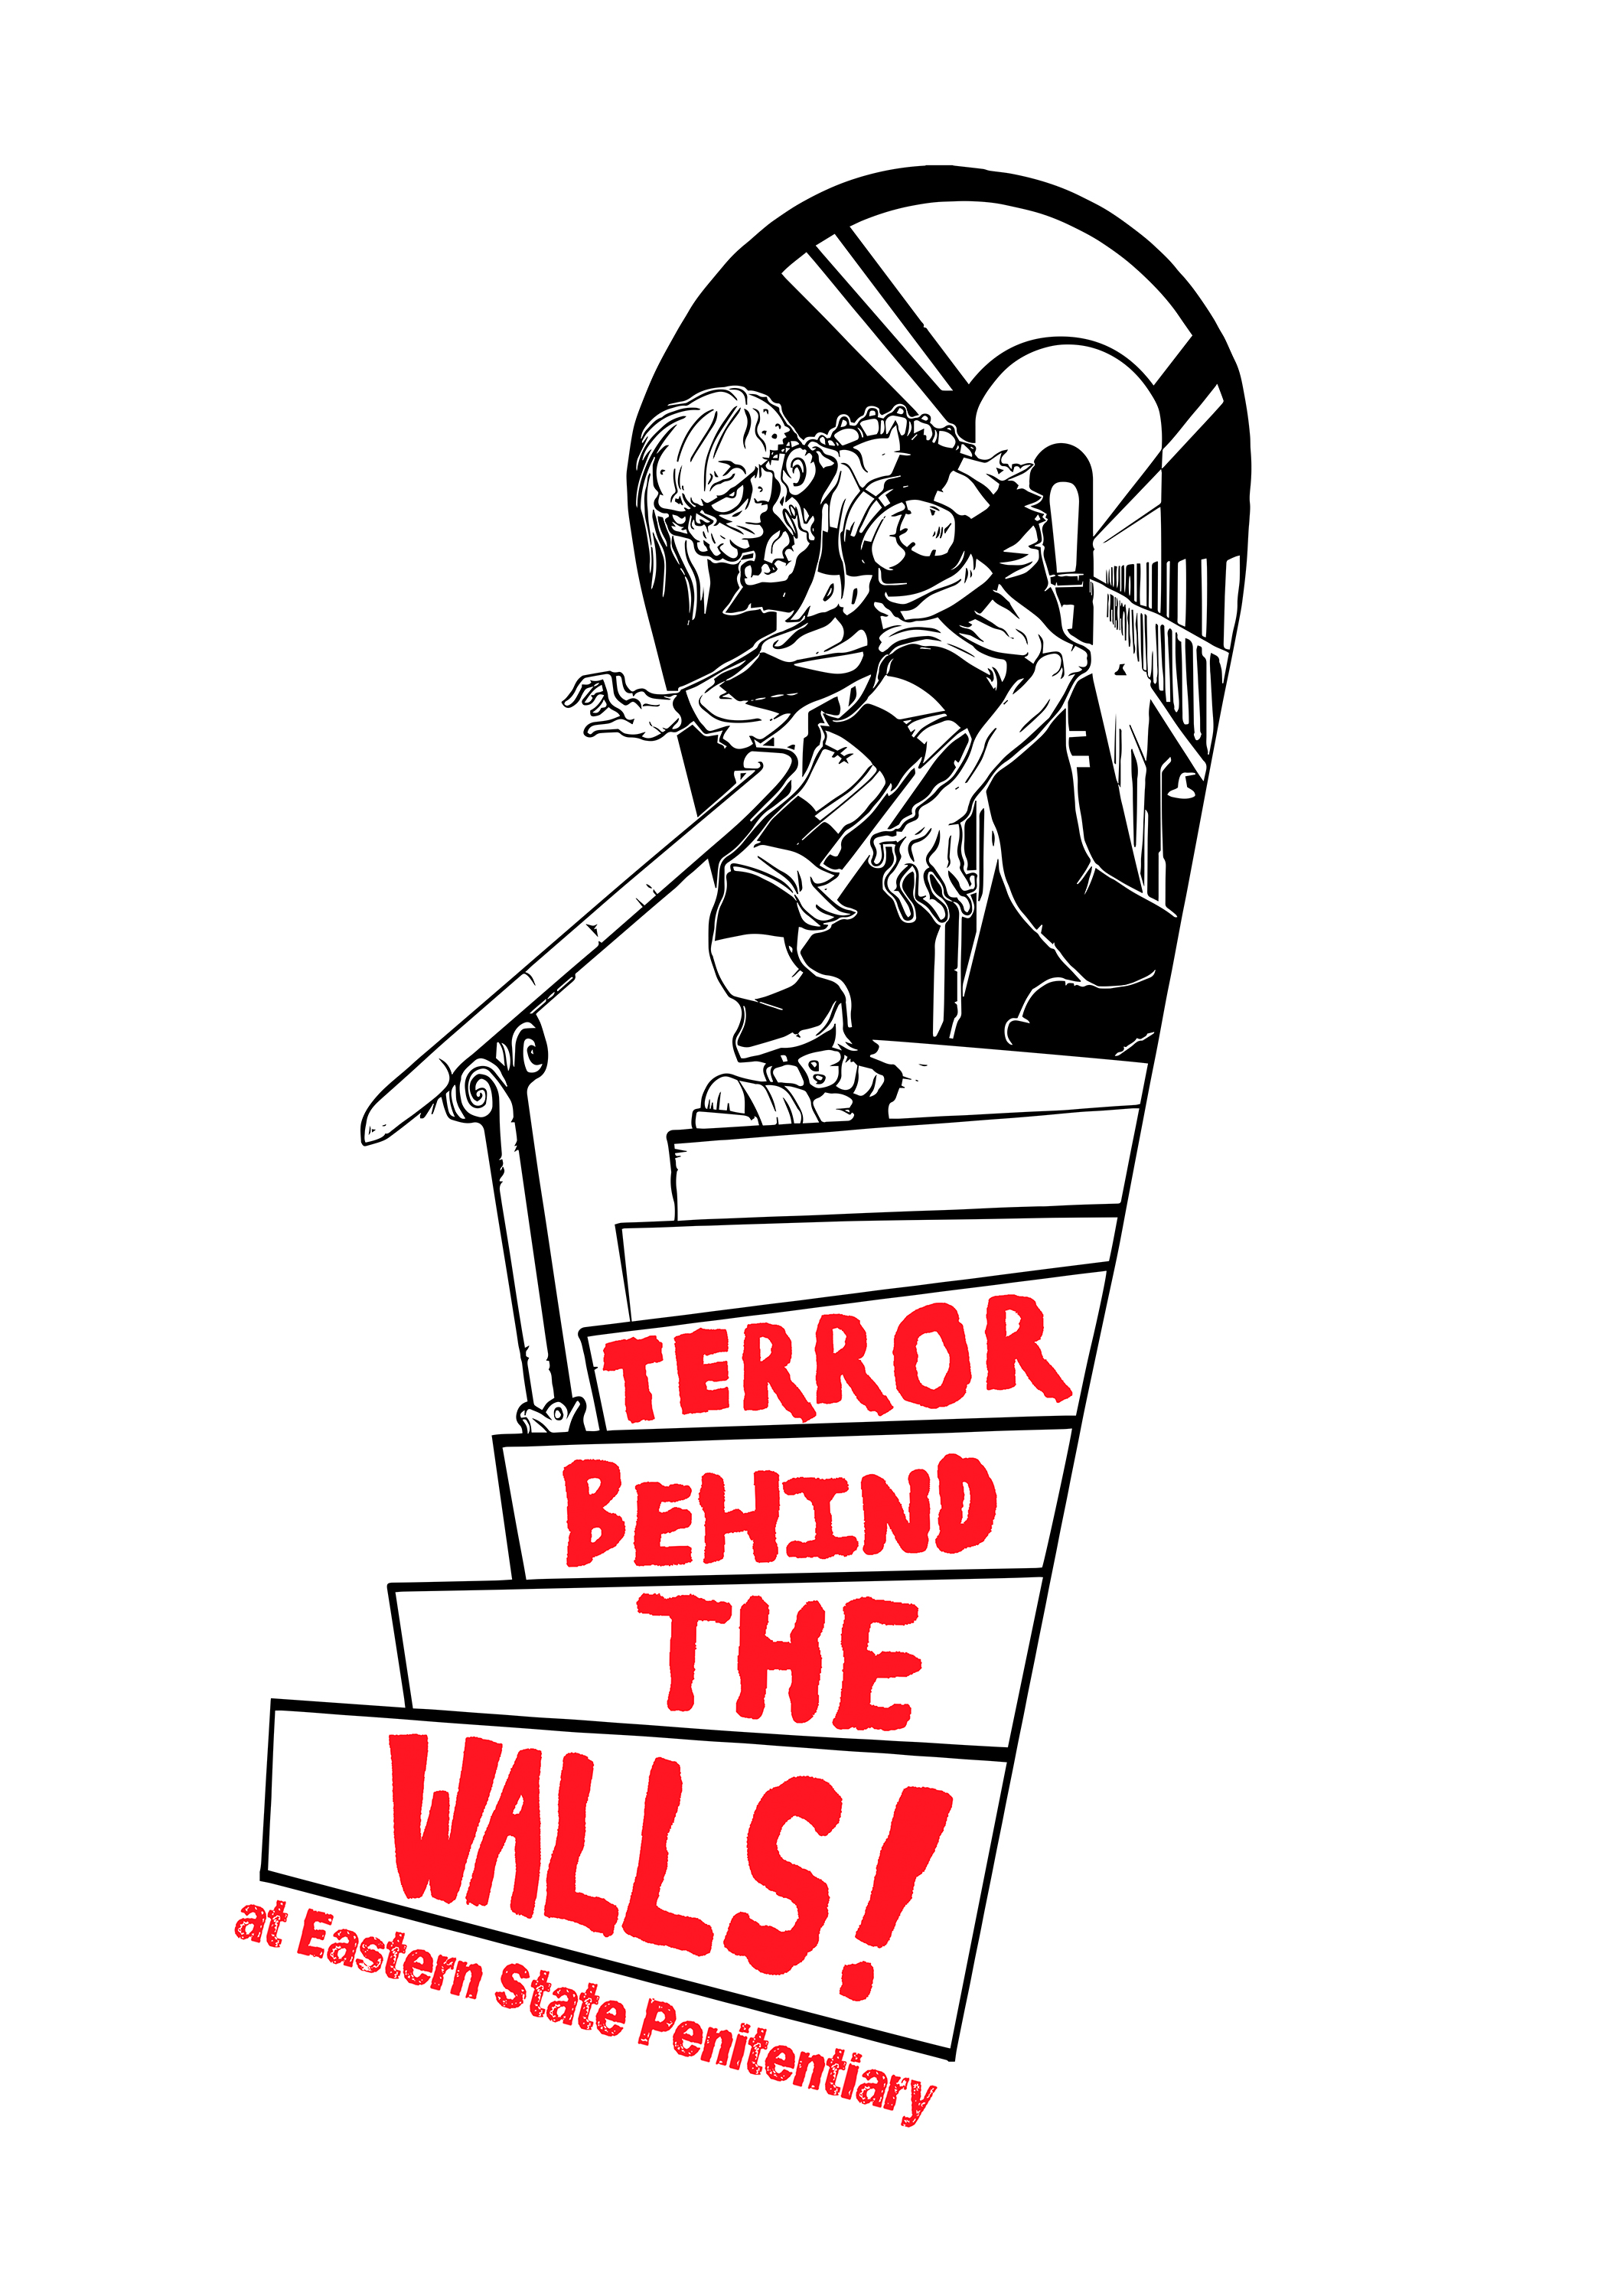 Terror Behind the Walls Advertisement